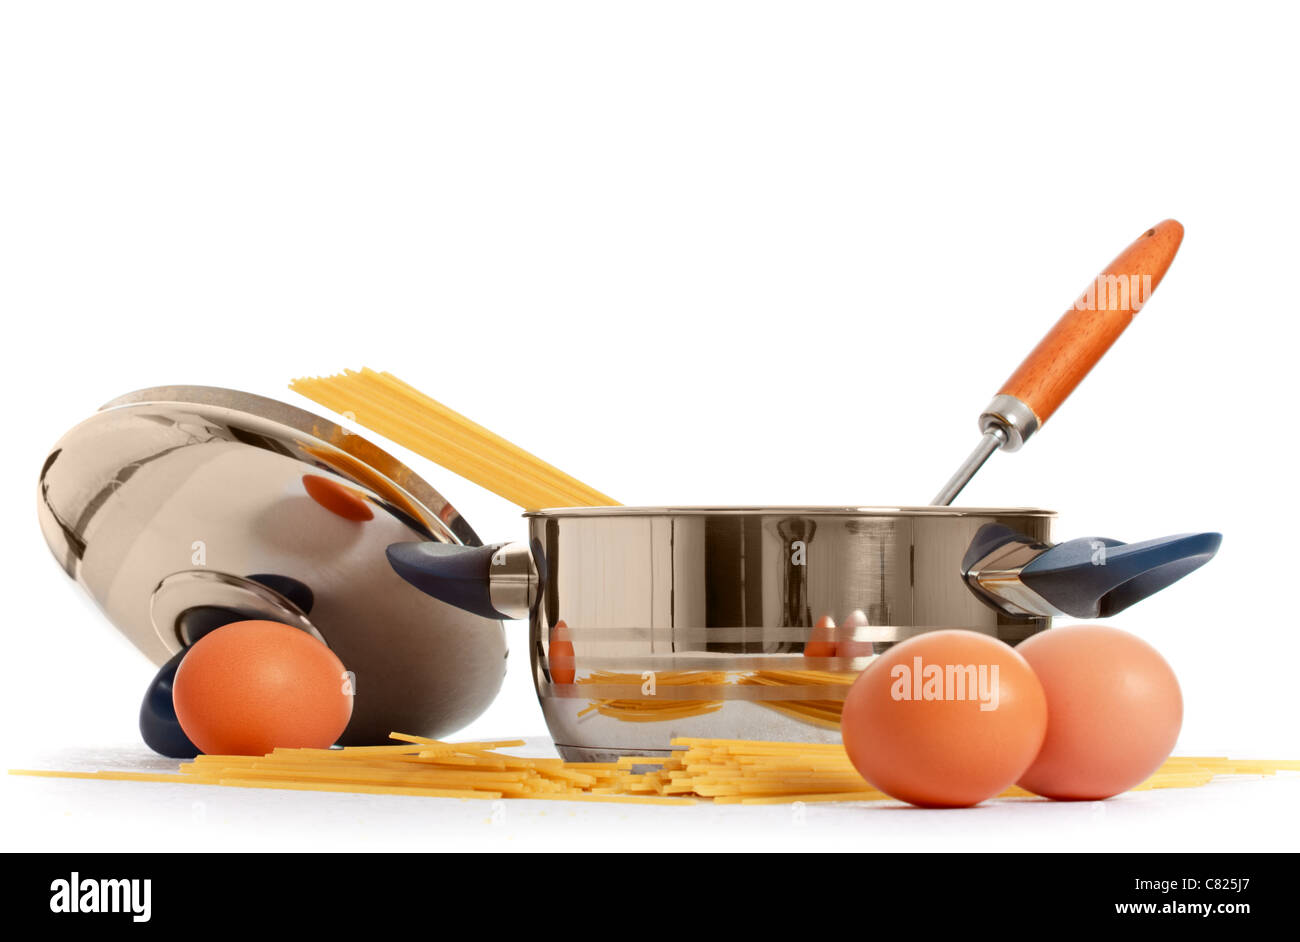 spaghetti, eggs and kitchen utensil on white background Stock Photo